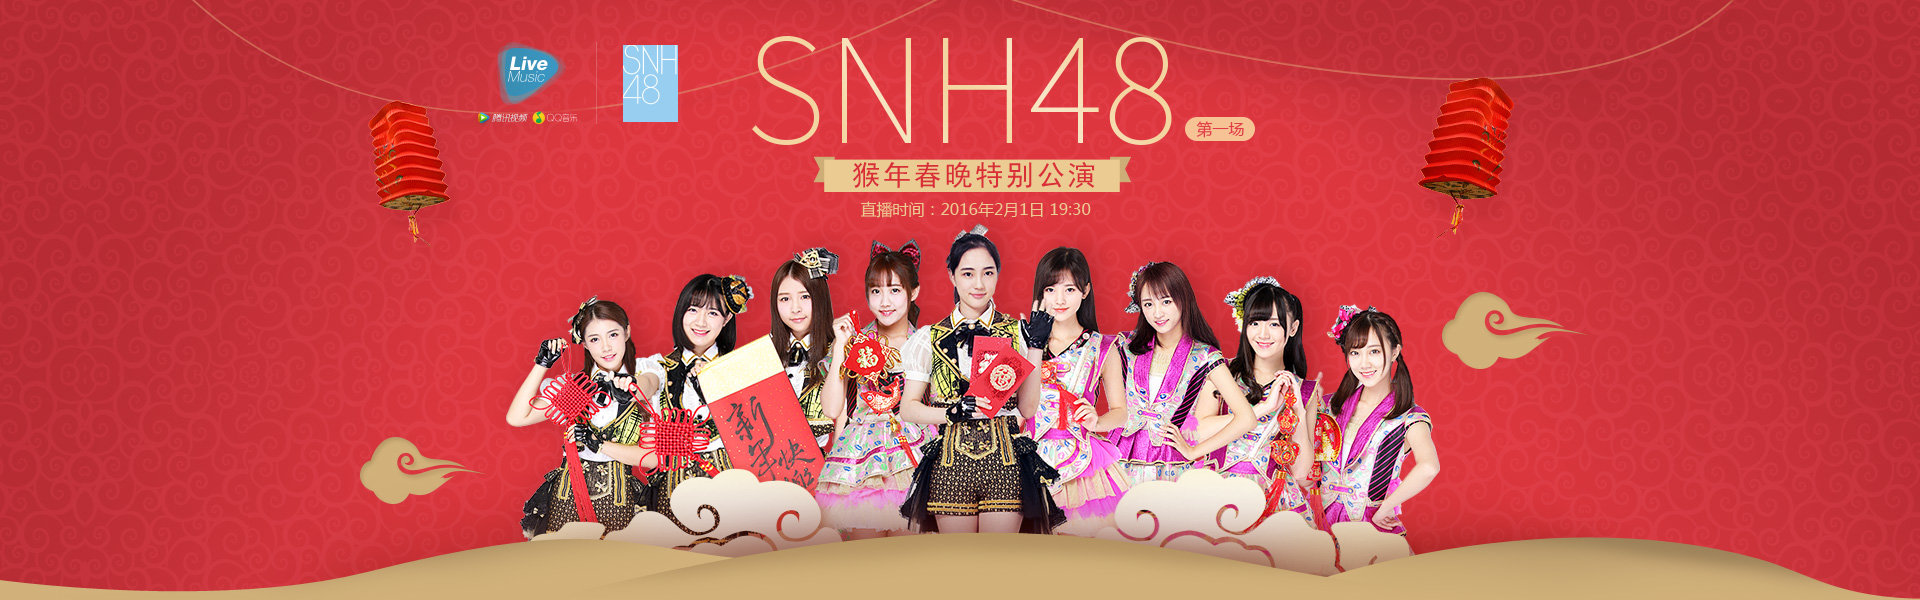 snh48猴年春晚特别公演(一)